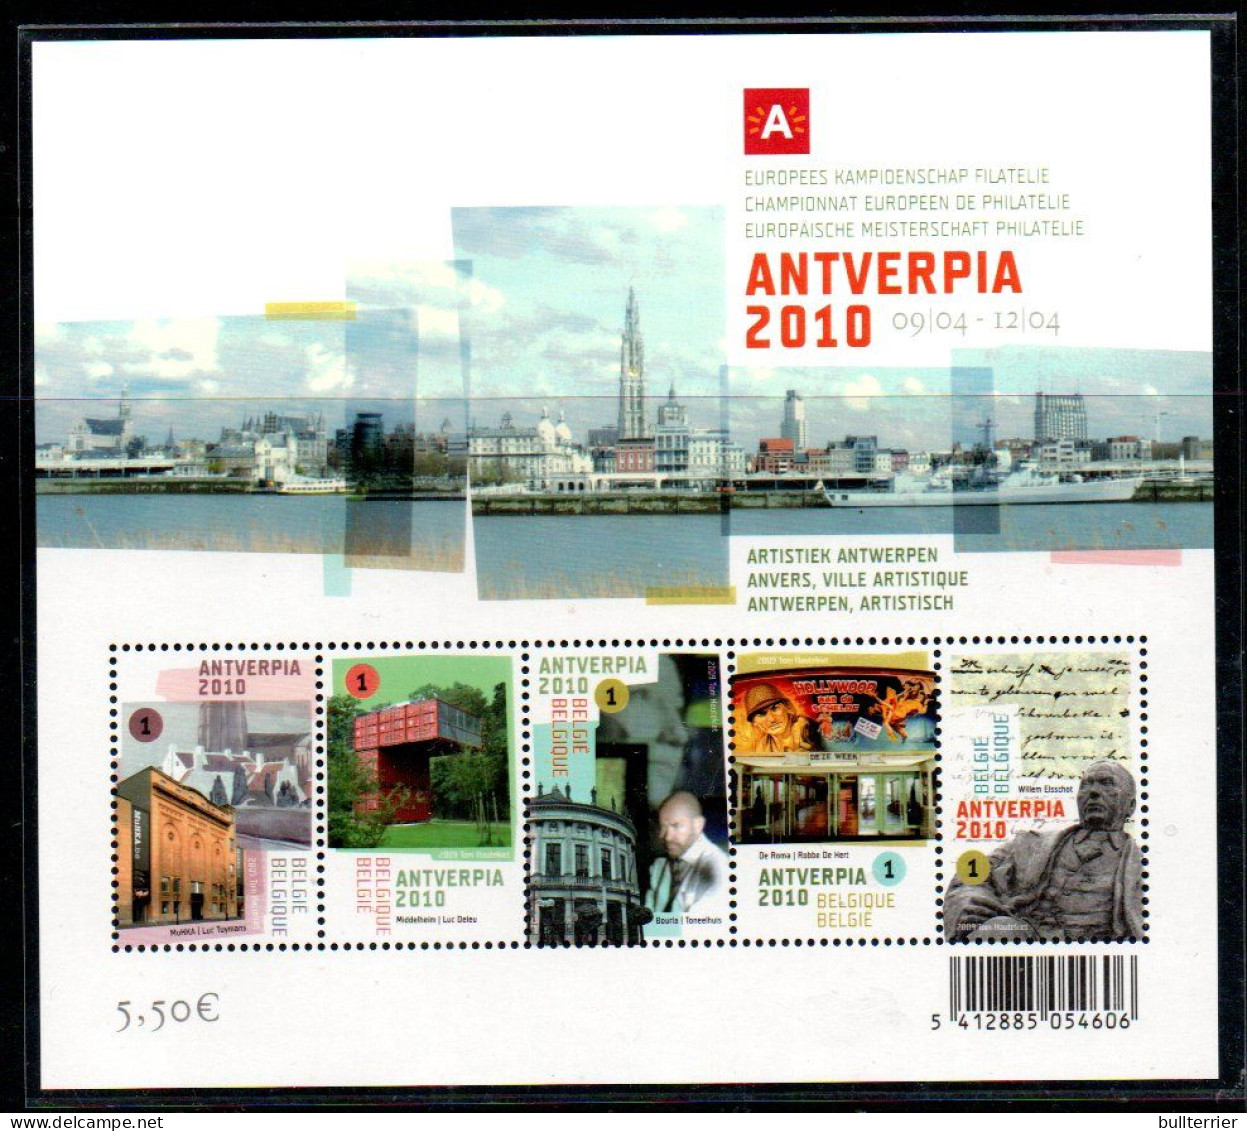 BELGIUM - 2009 - ANTWERP EXHIBITION  SOUVENIR SHEET MIN1T NEVER HINGED  , SG CAT £35 - Unused Stamps